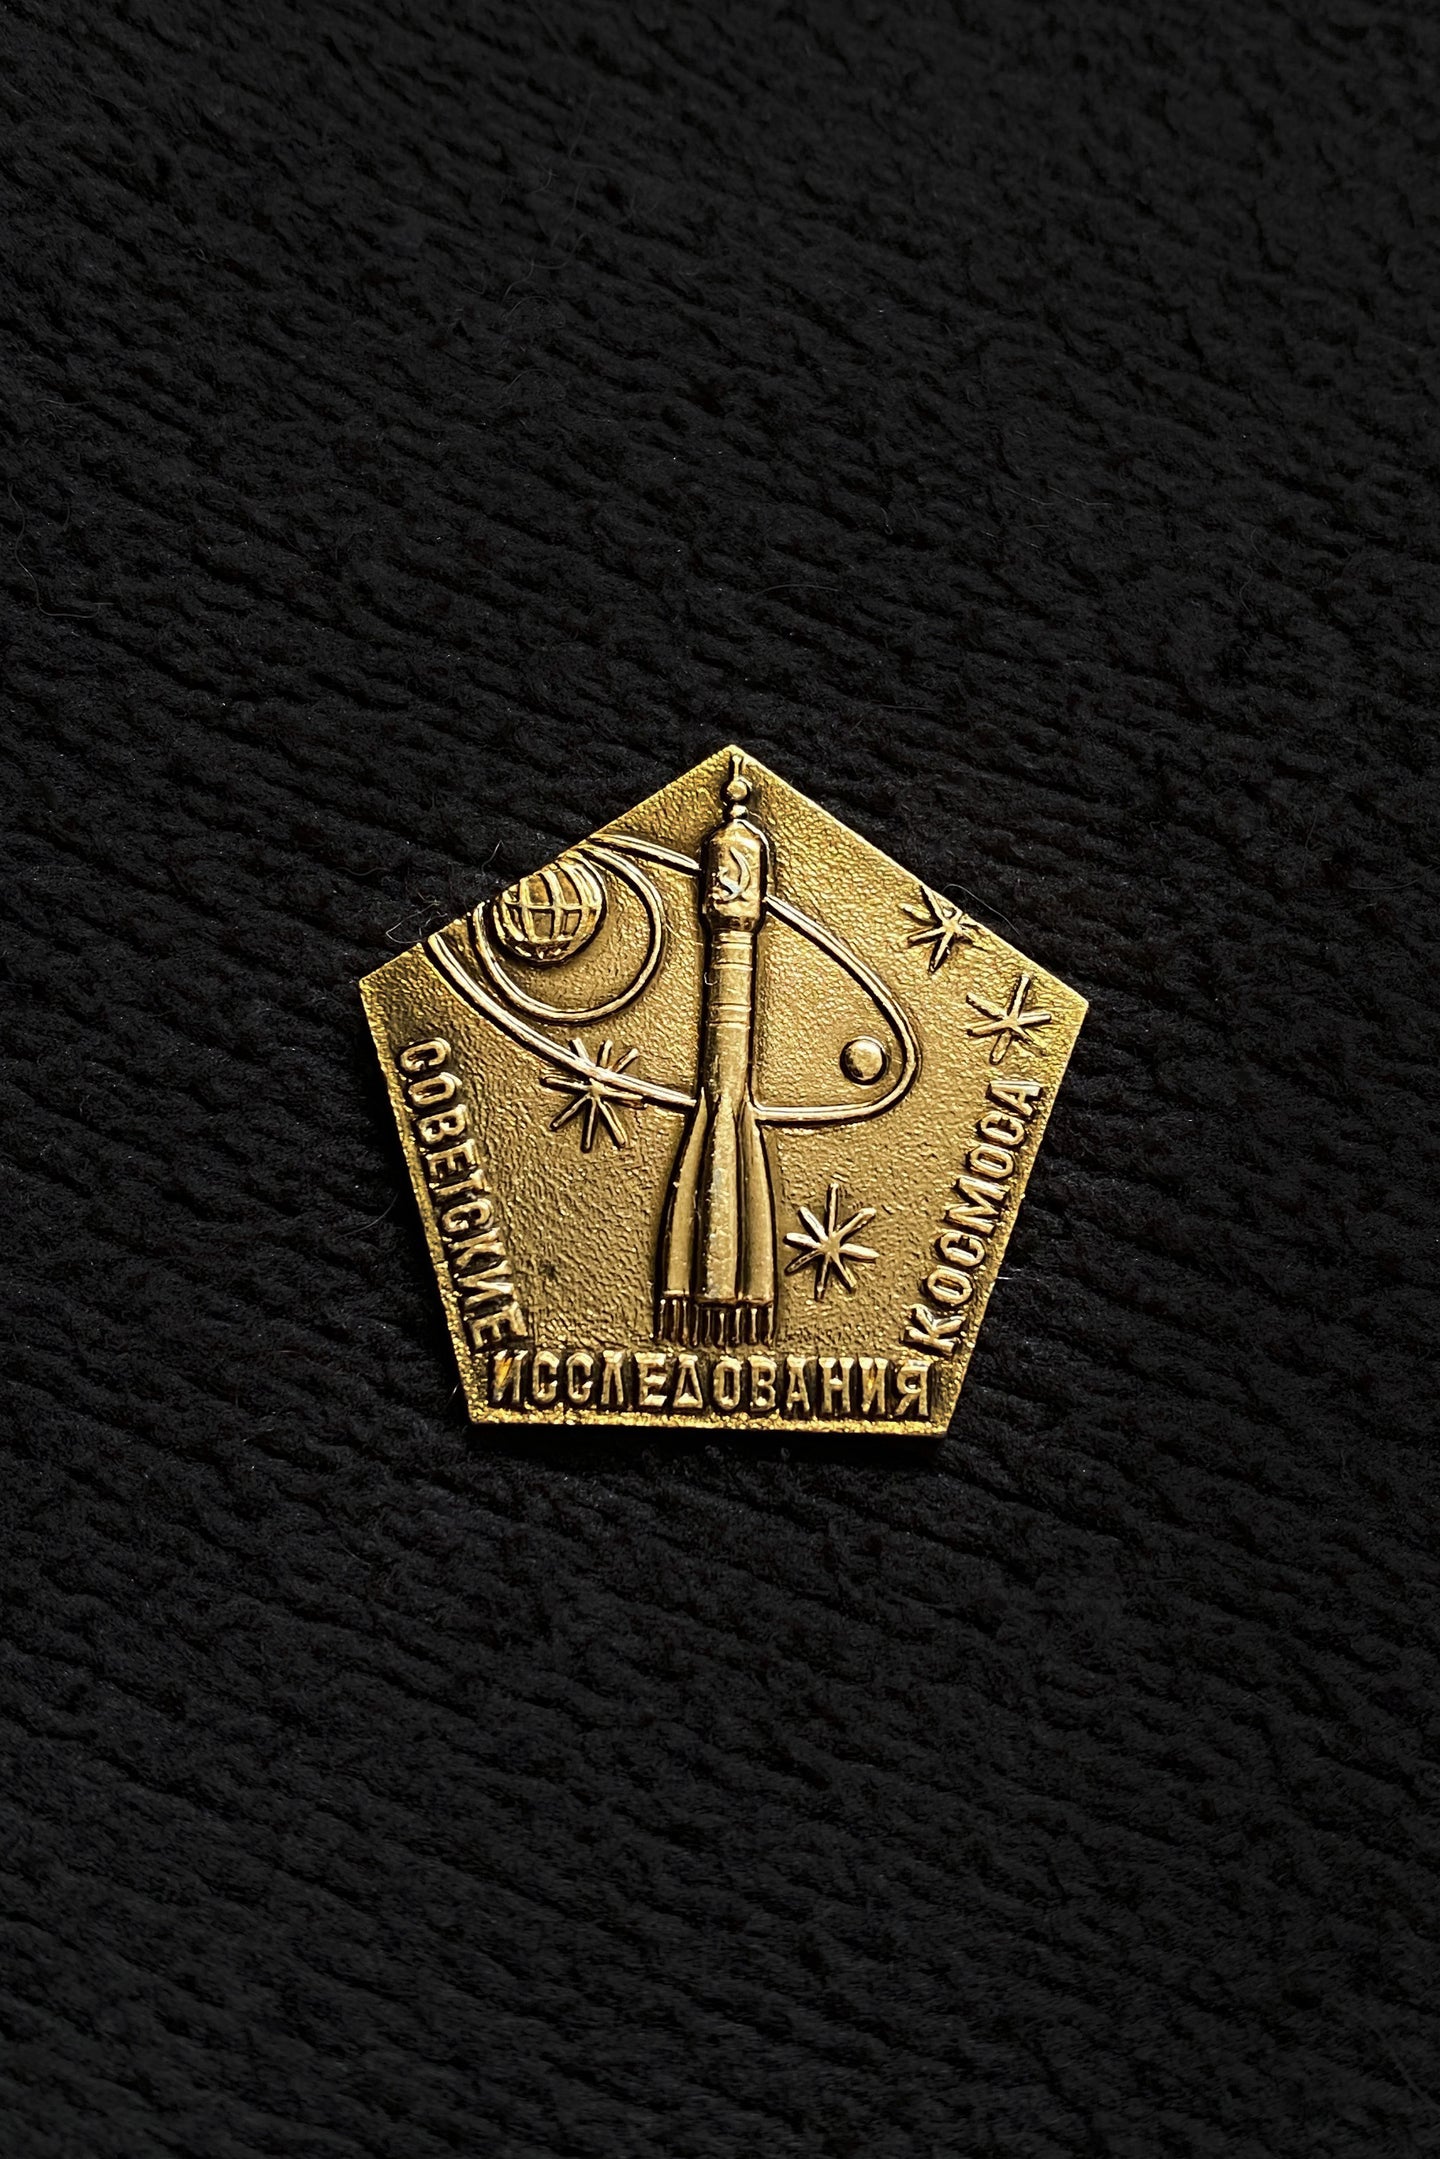 soviet space program symbol